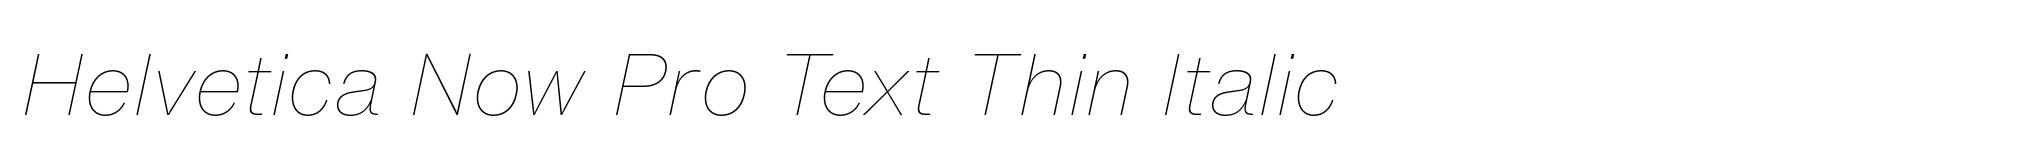 Helvetica Now Pro Text Thin Italic image